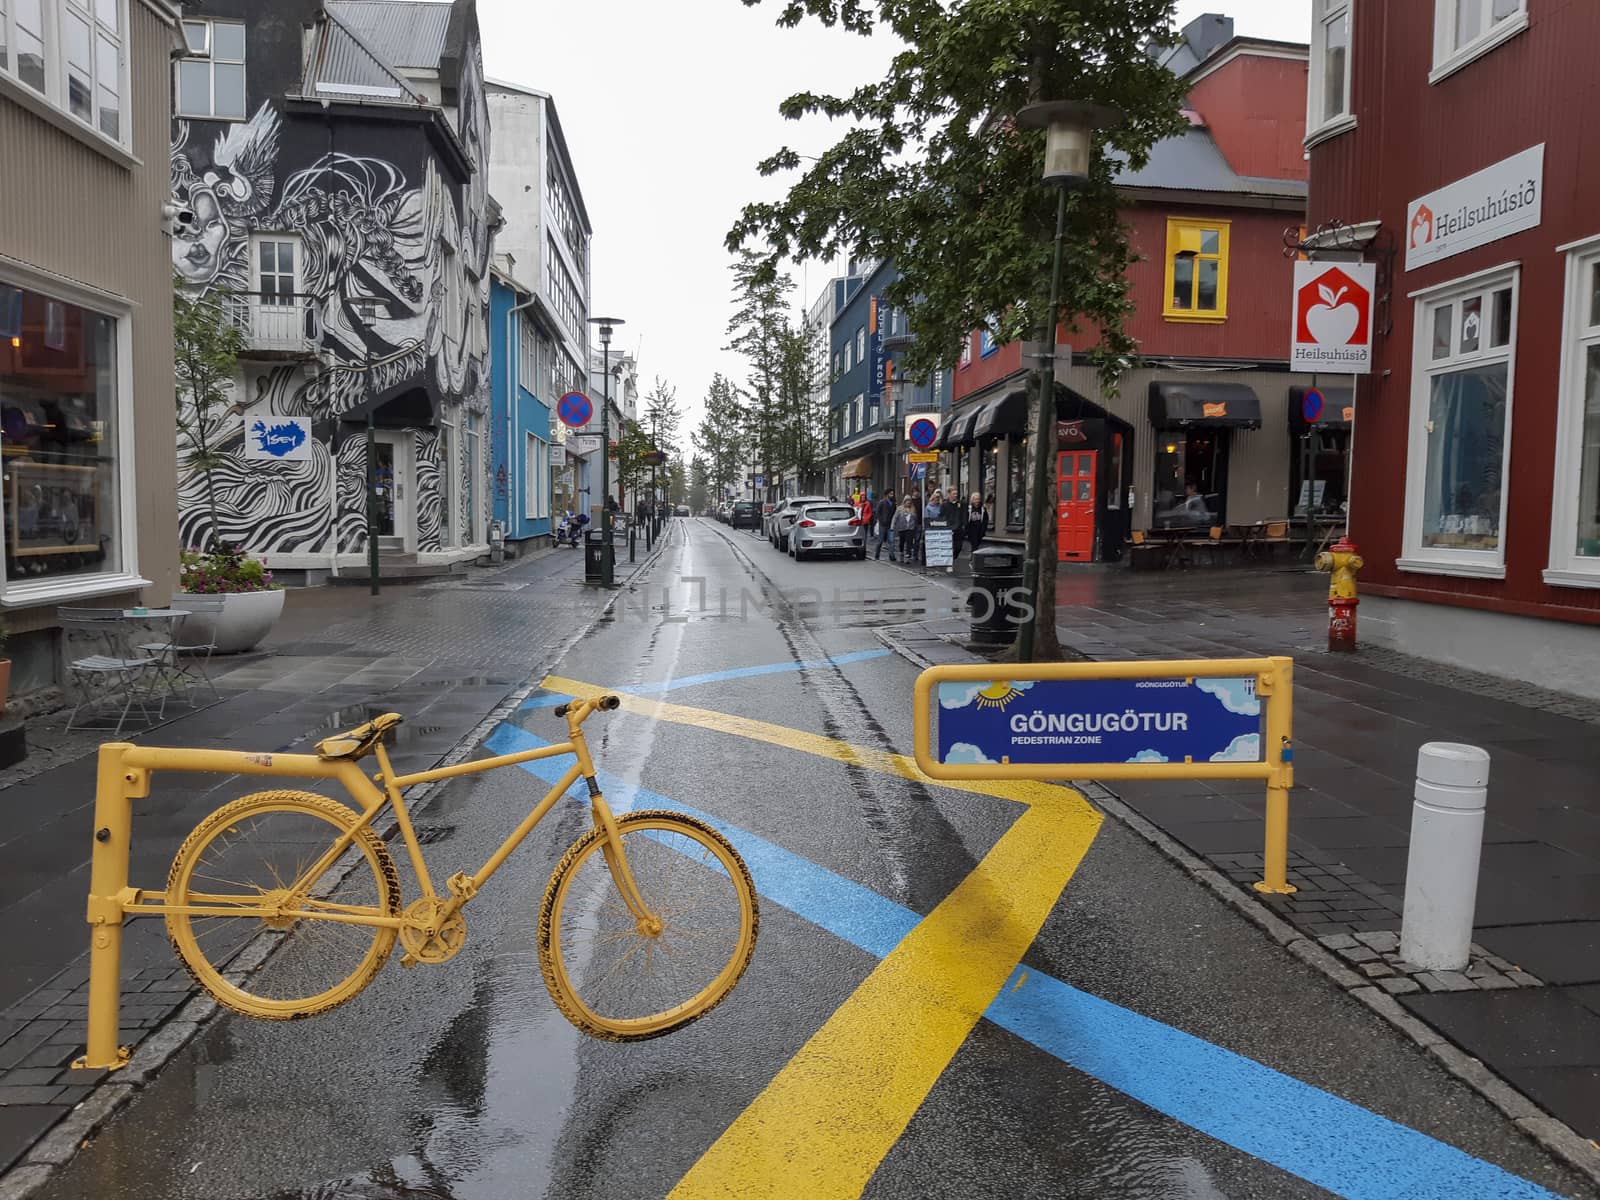 pedestrian zone street scene in Reykjavik, Iceland, on a rainy day in a shopping street by kb79